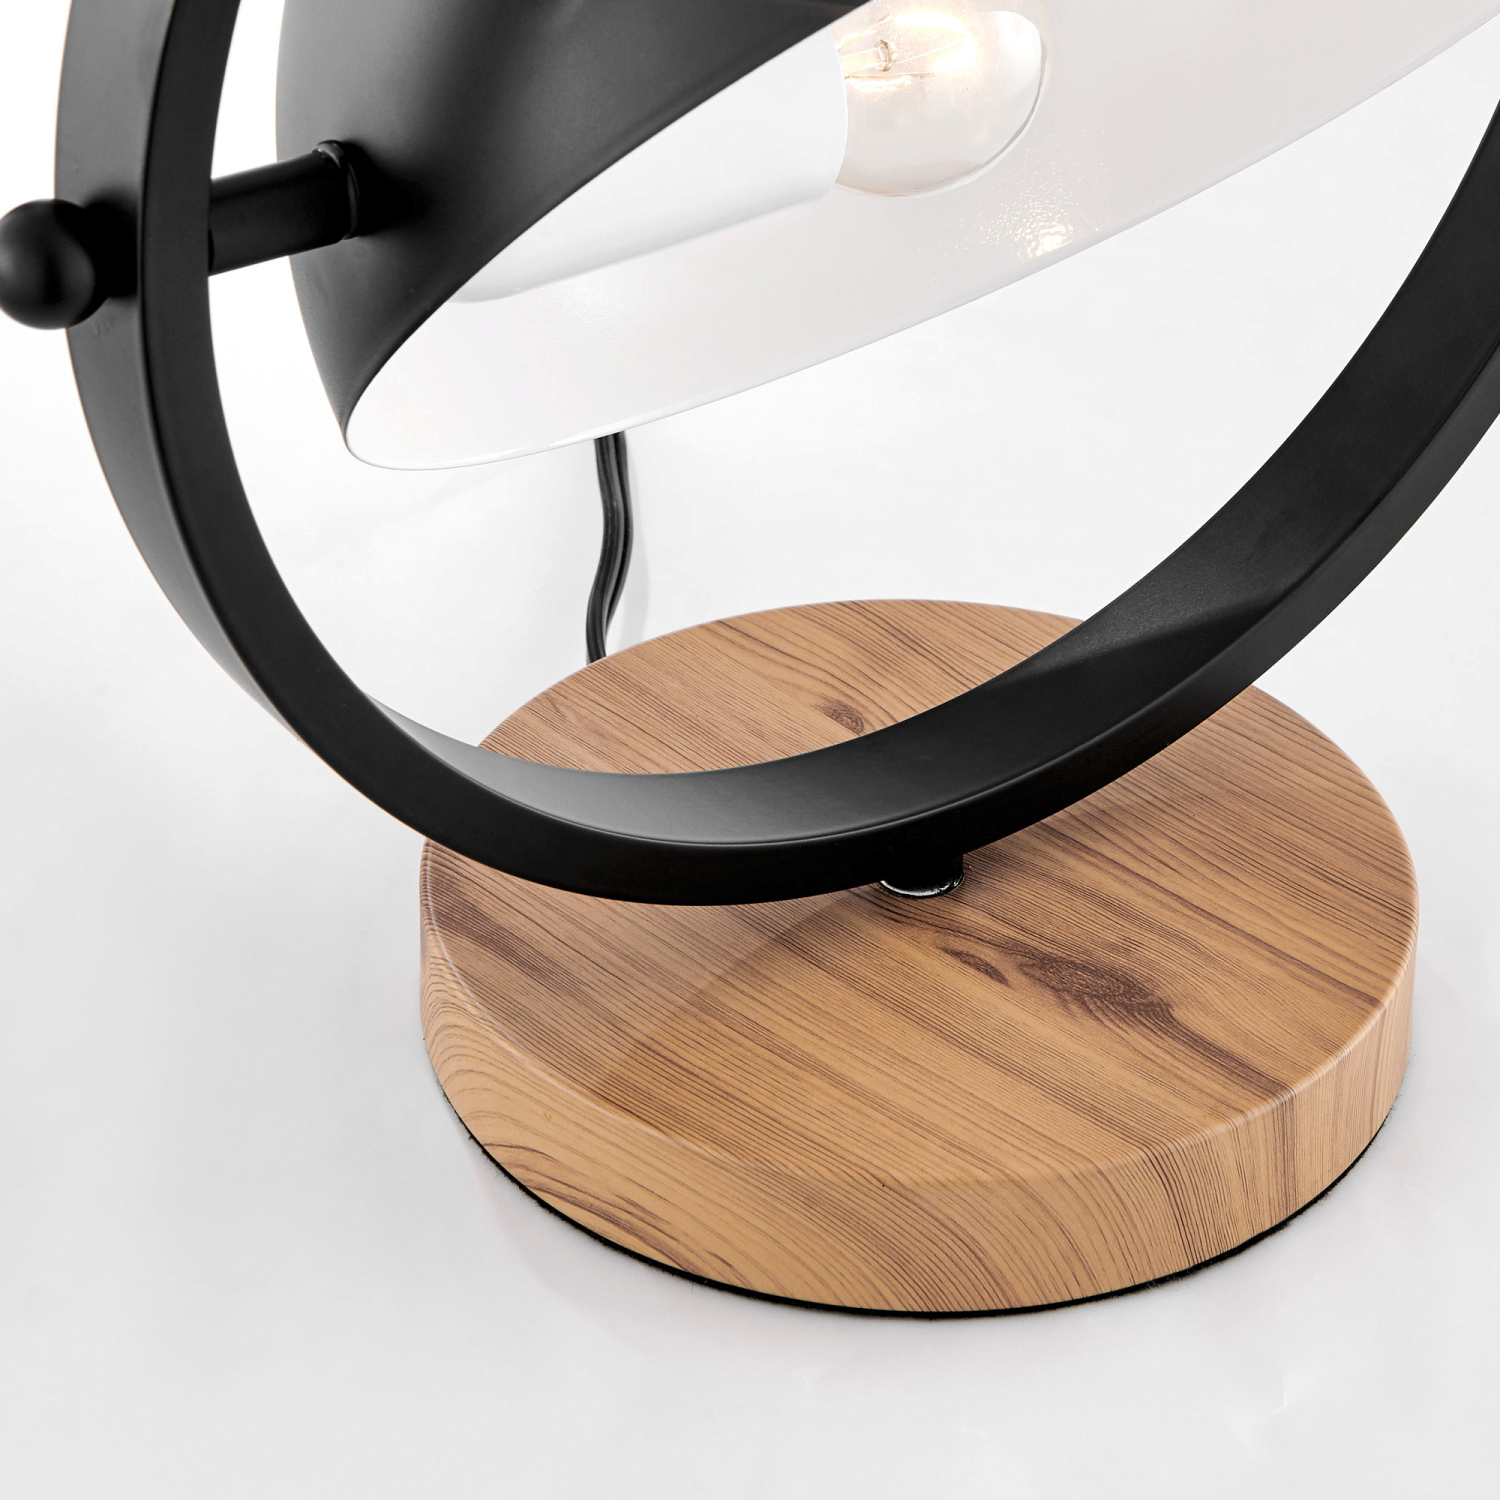 Wanda Desk Lamp Close Up of Wooden Base